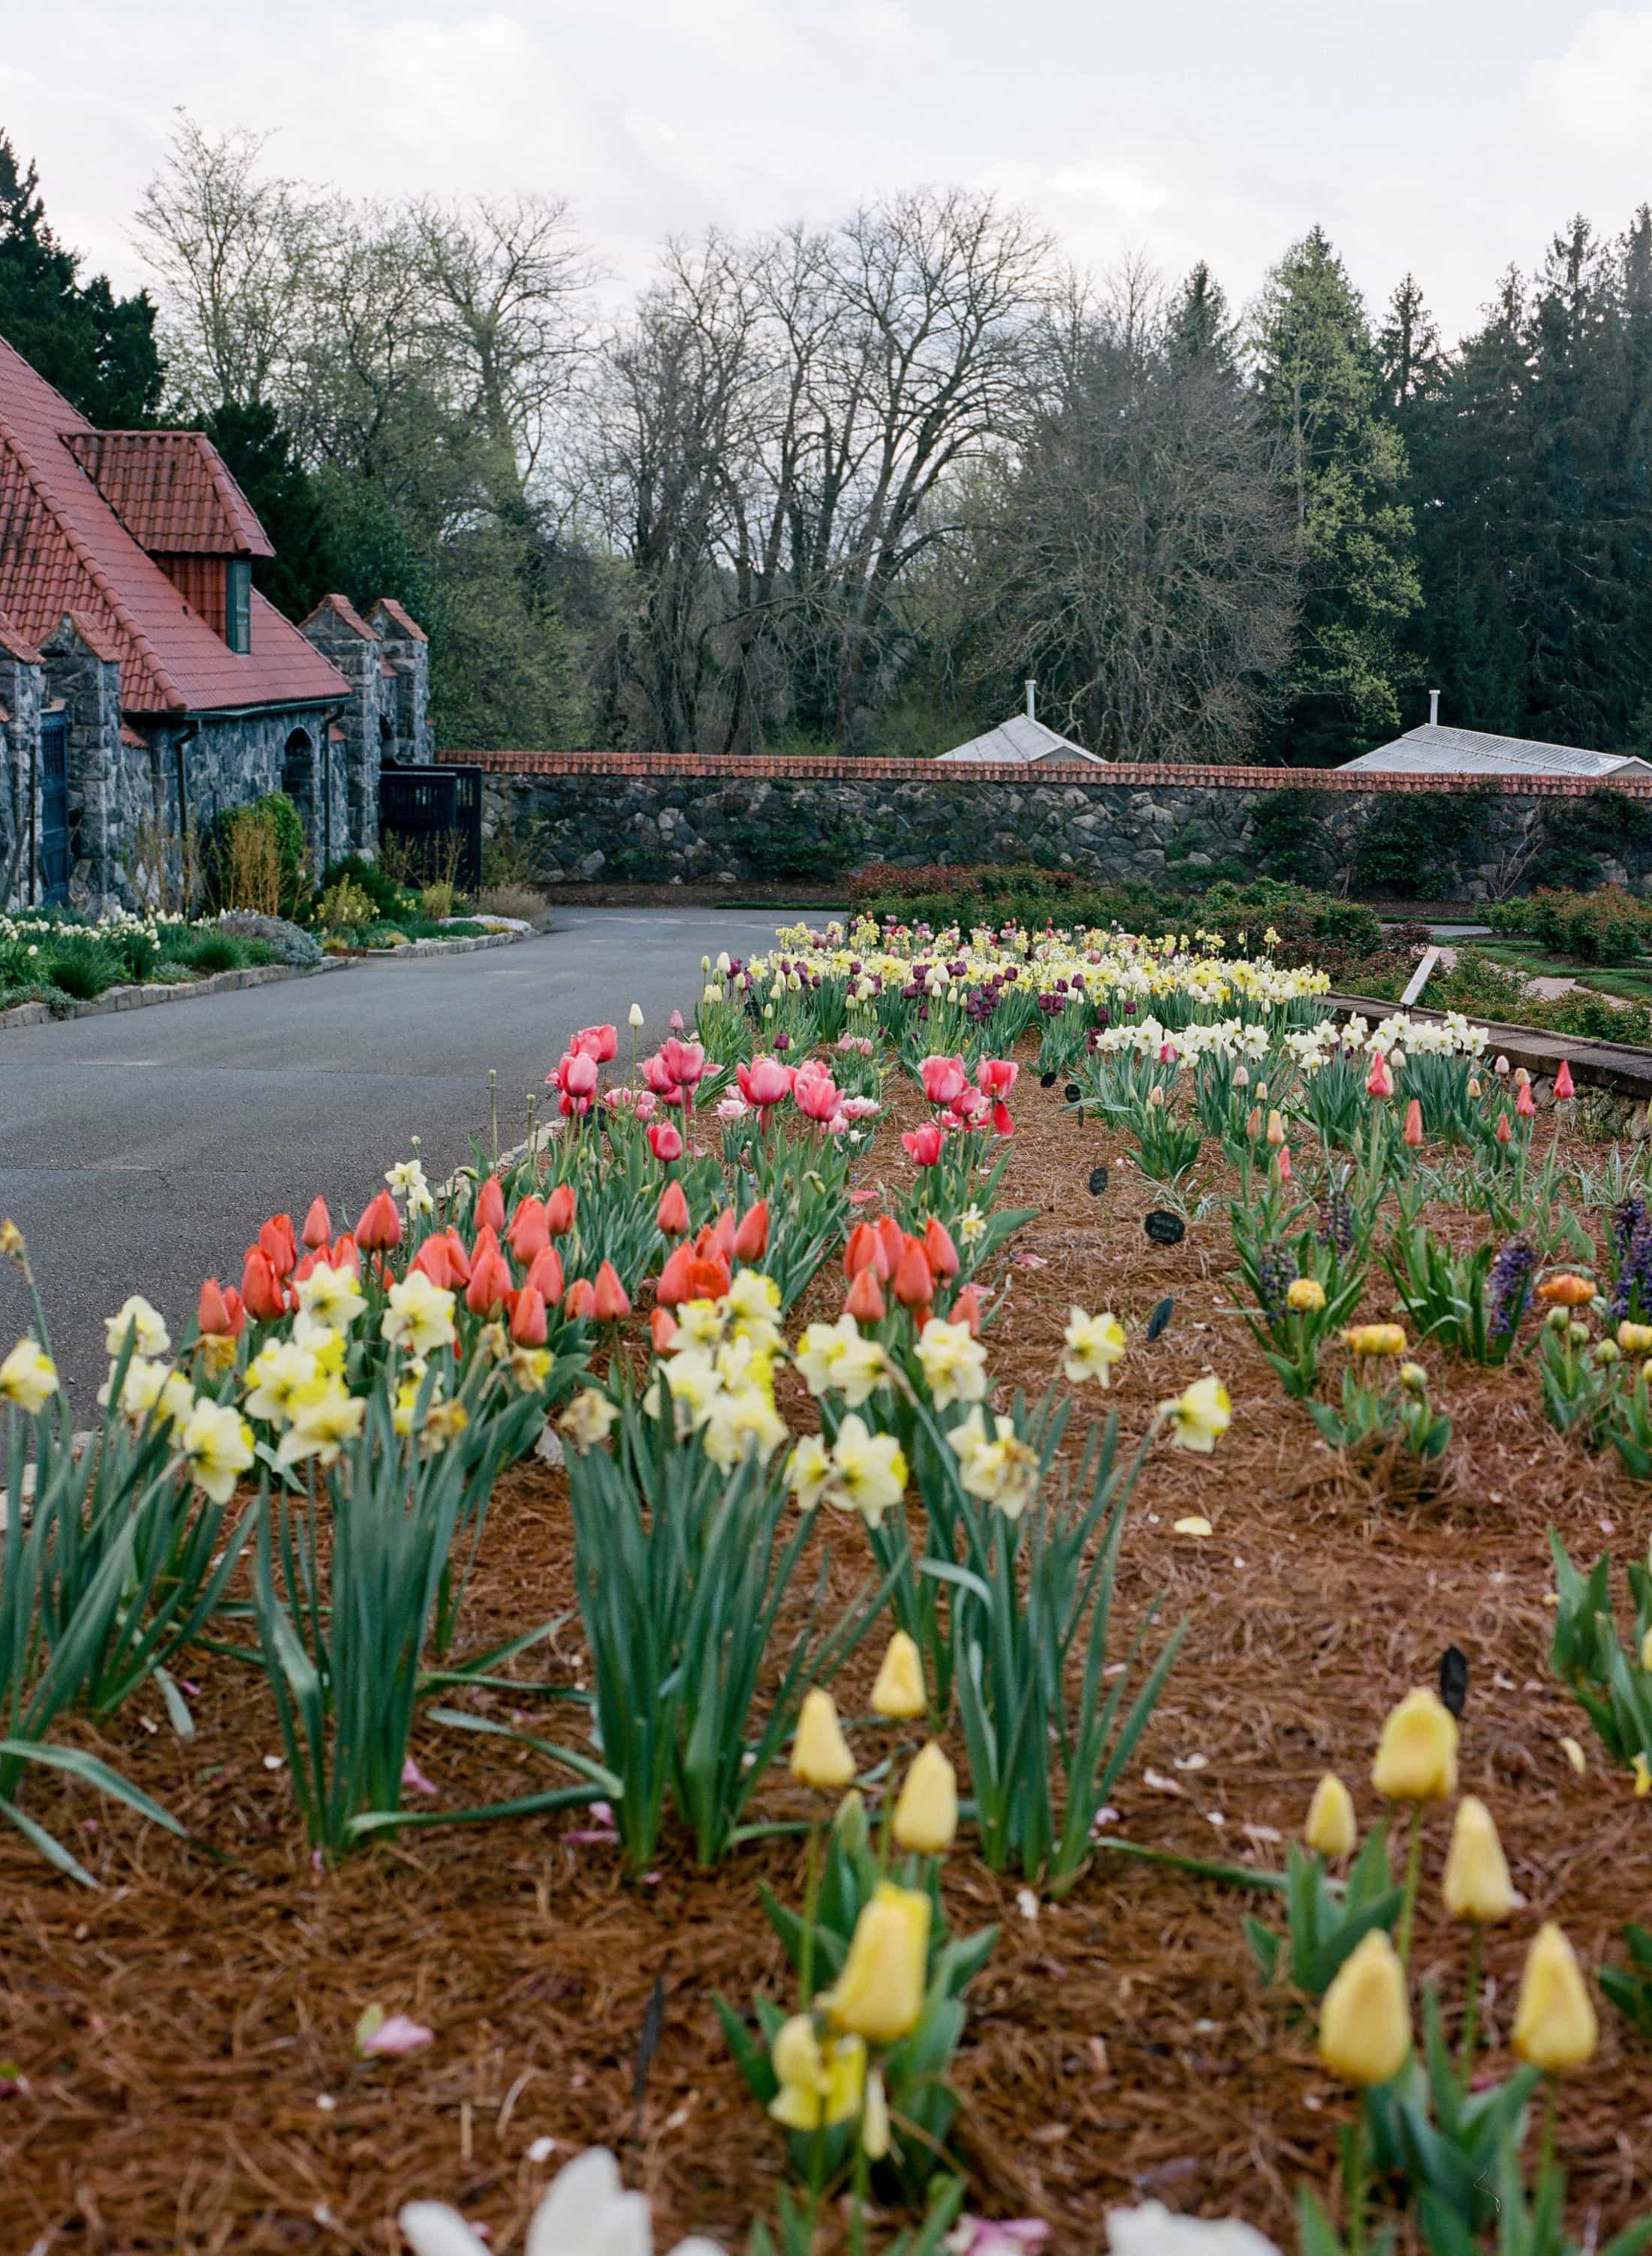 Film-Portra 400, Asheville Film Photography, Bitmore Estate Gardens, Walled Gardens Biltmore House, Biltmore Blooms tulips, Asheville flowers Spring